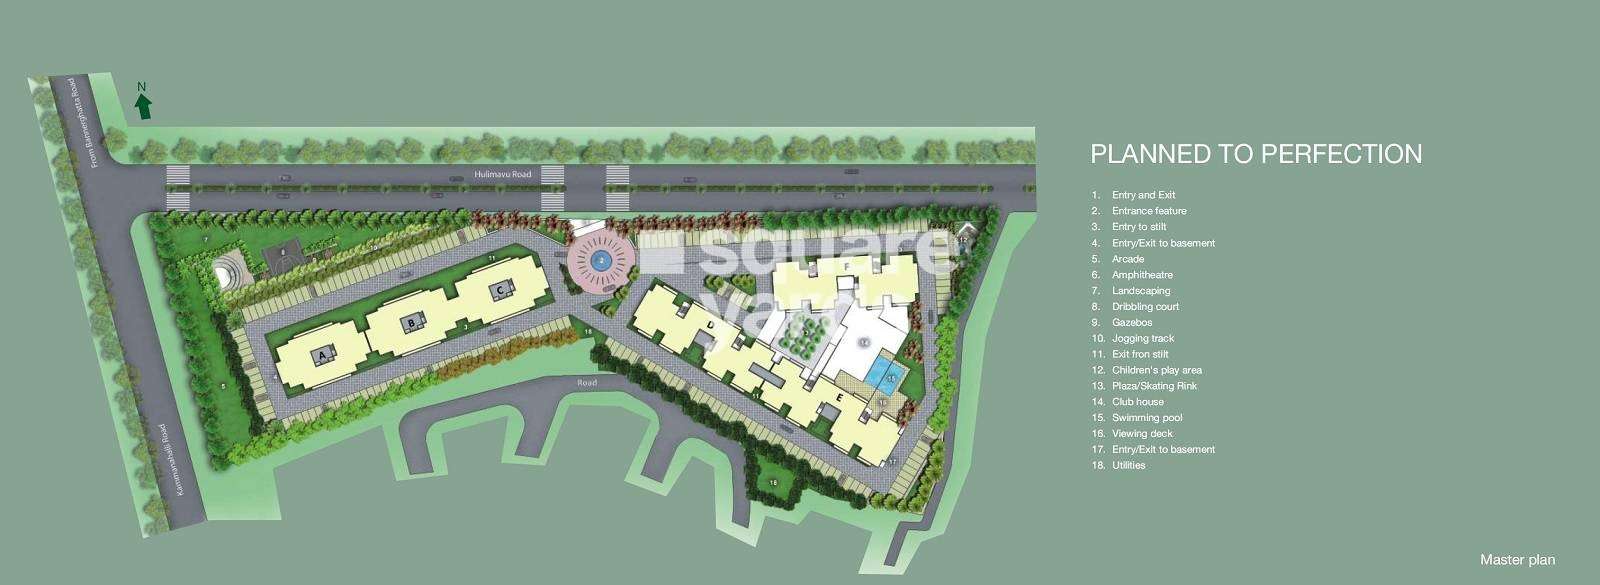 nitesh hyde park project master plan image1 7305